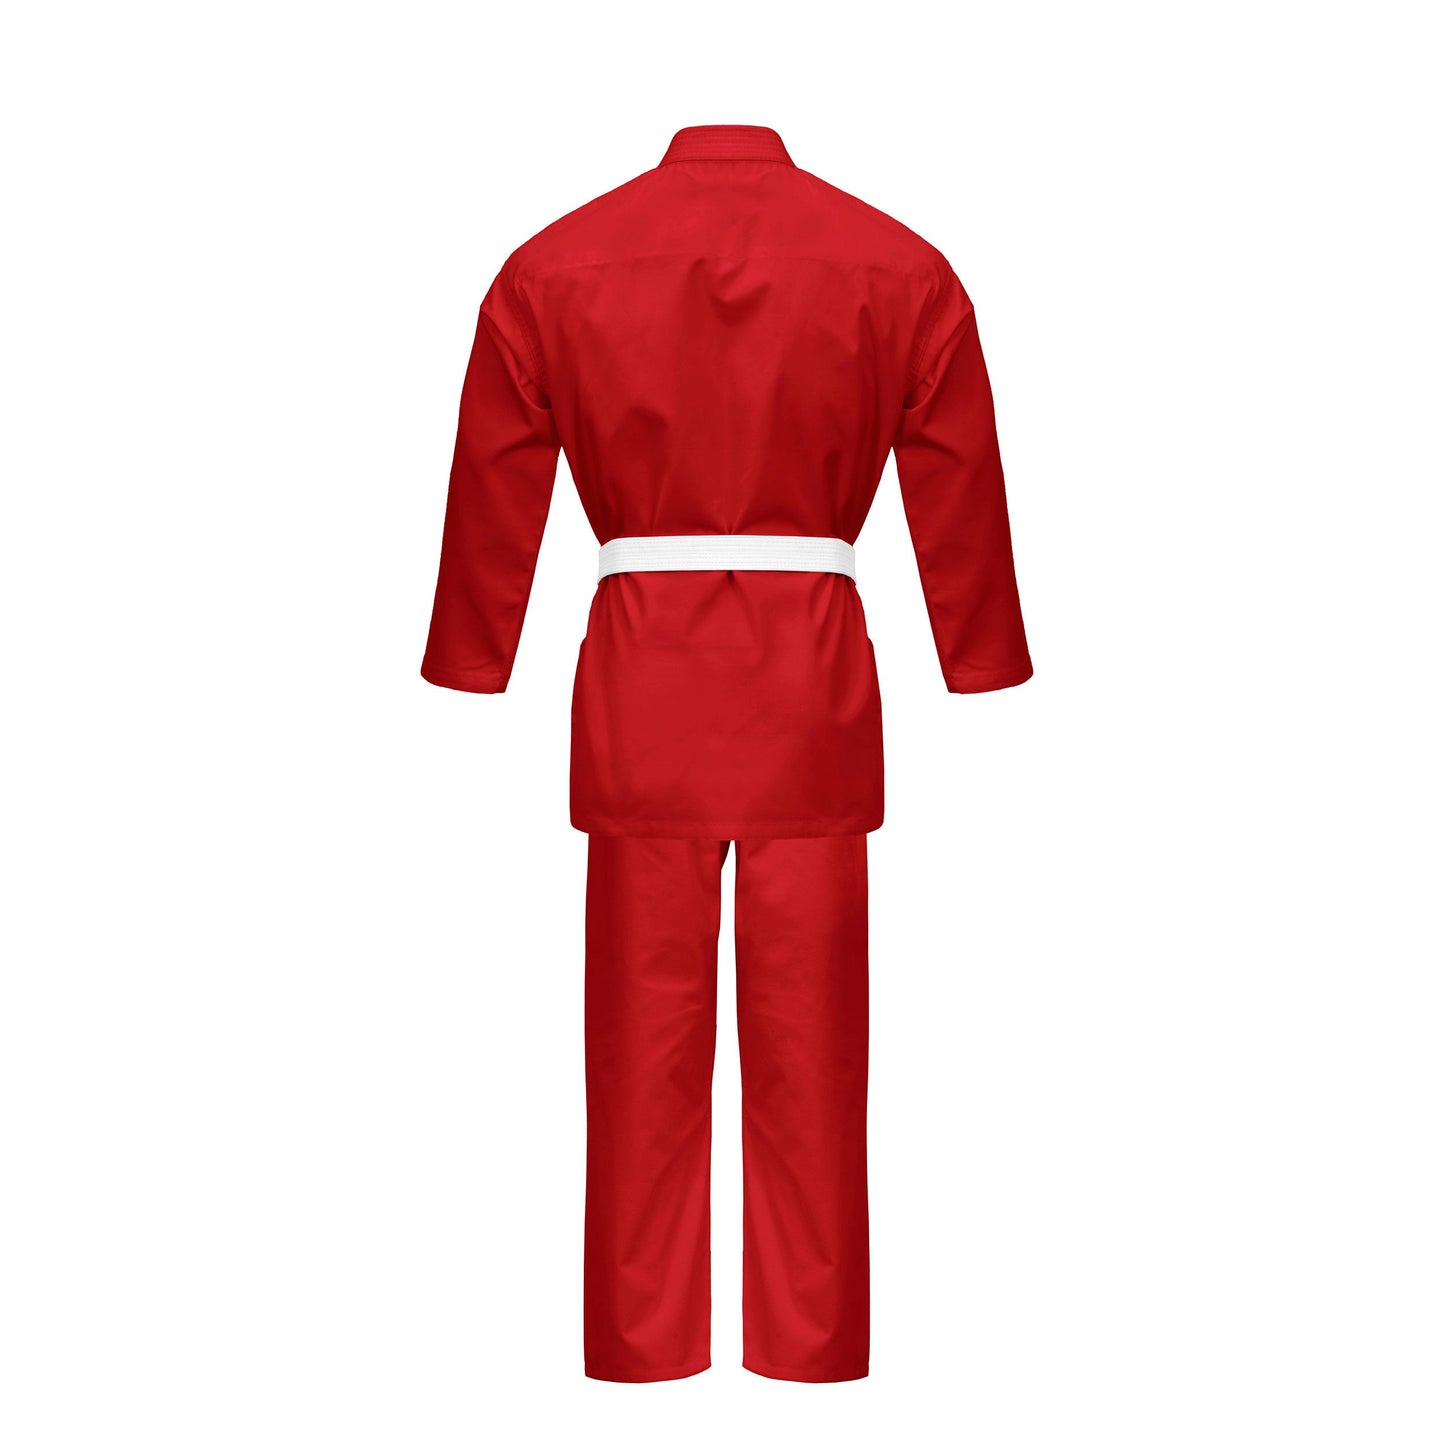 Jaguar Colored Karate Uniform WKF Compliant - Light Weight Kids Adults Karate Gi - (Belt Included)